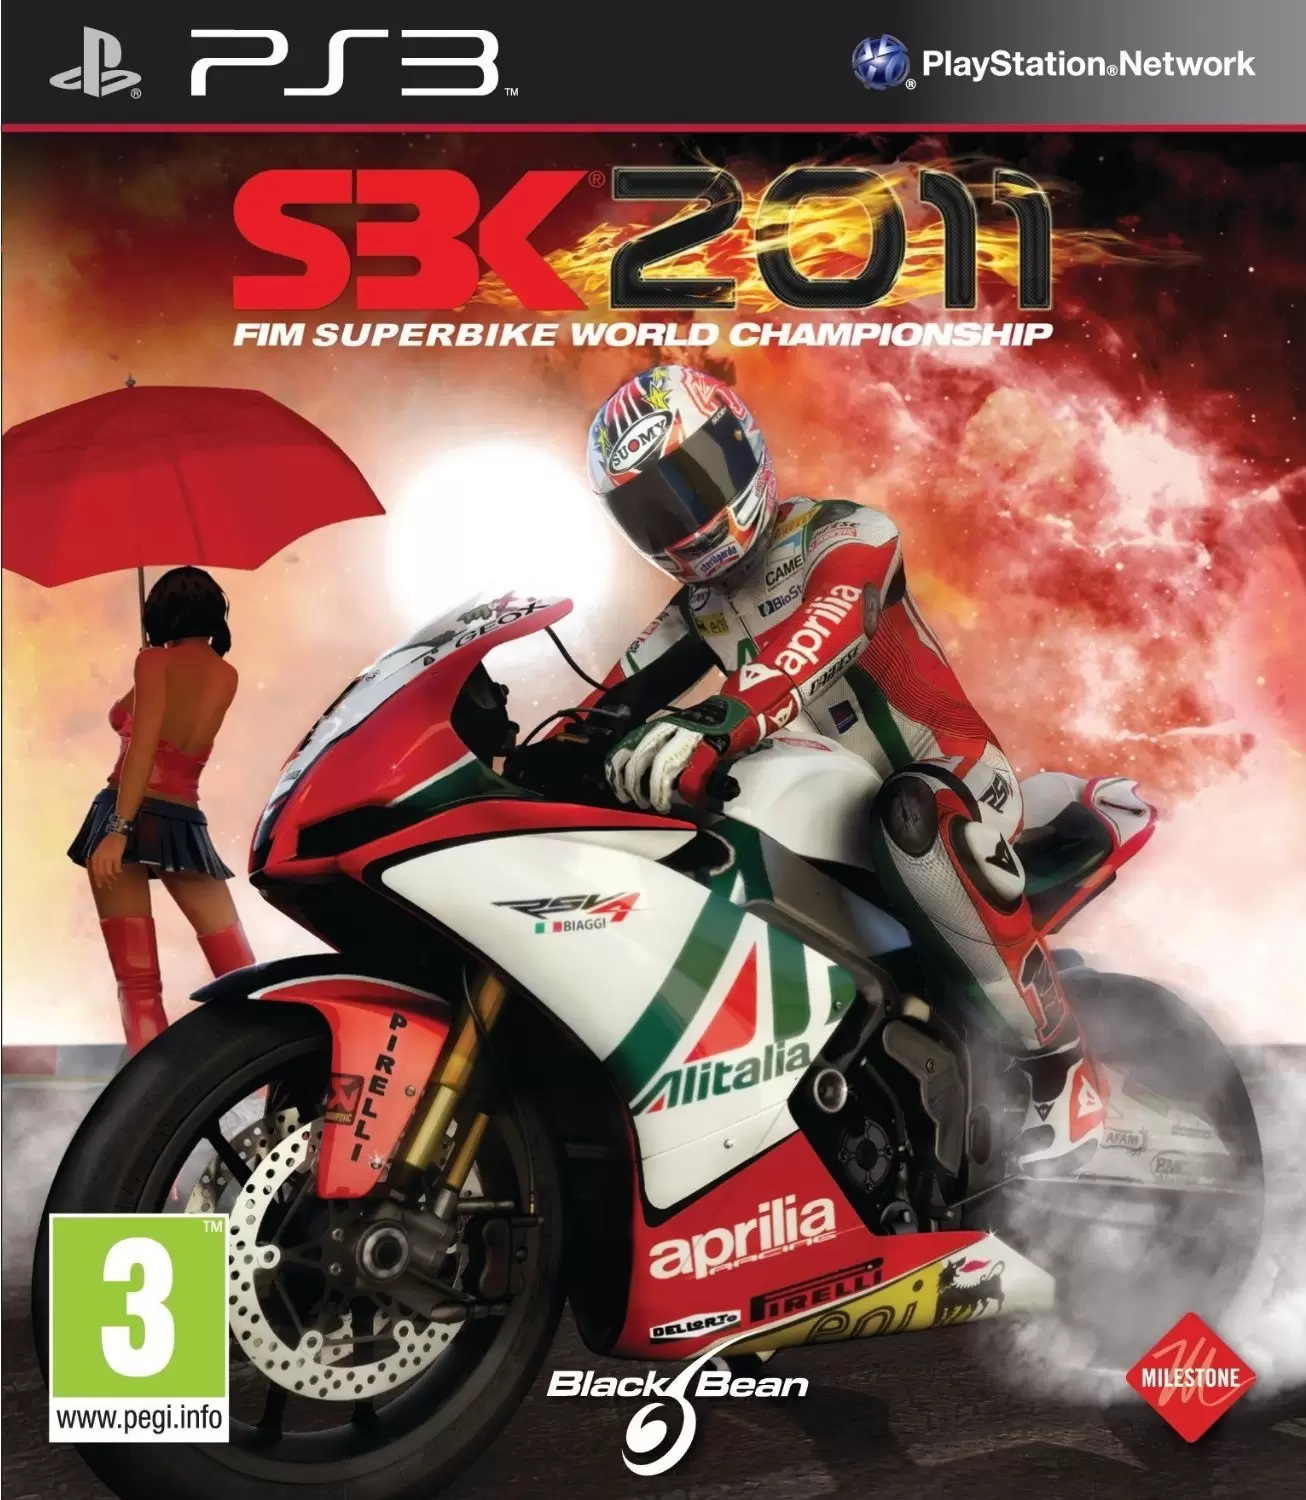 PS3 Games - SBK 2011: Superbike World Championship